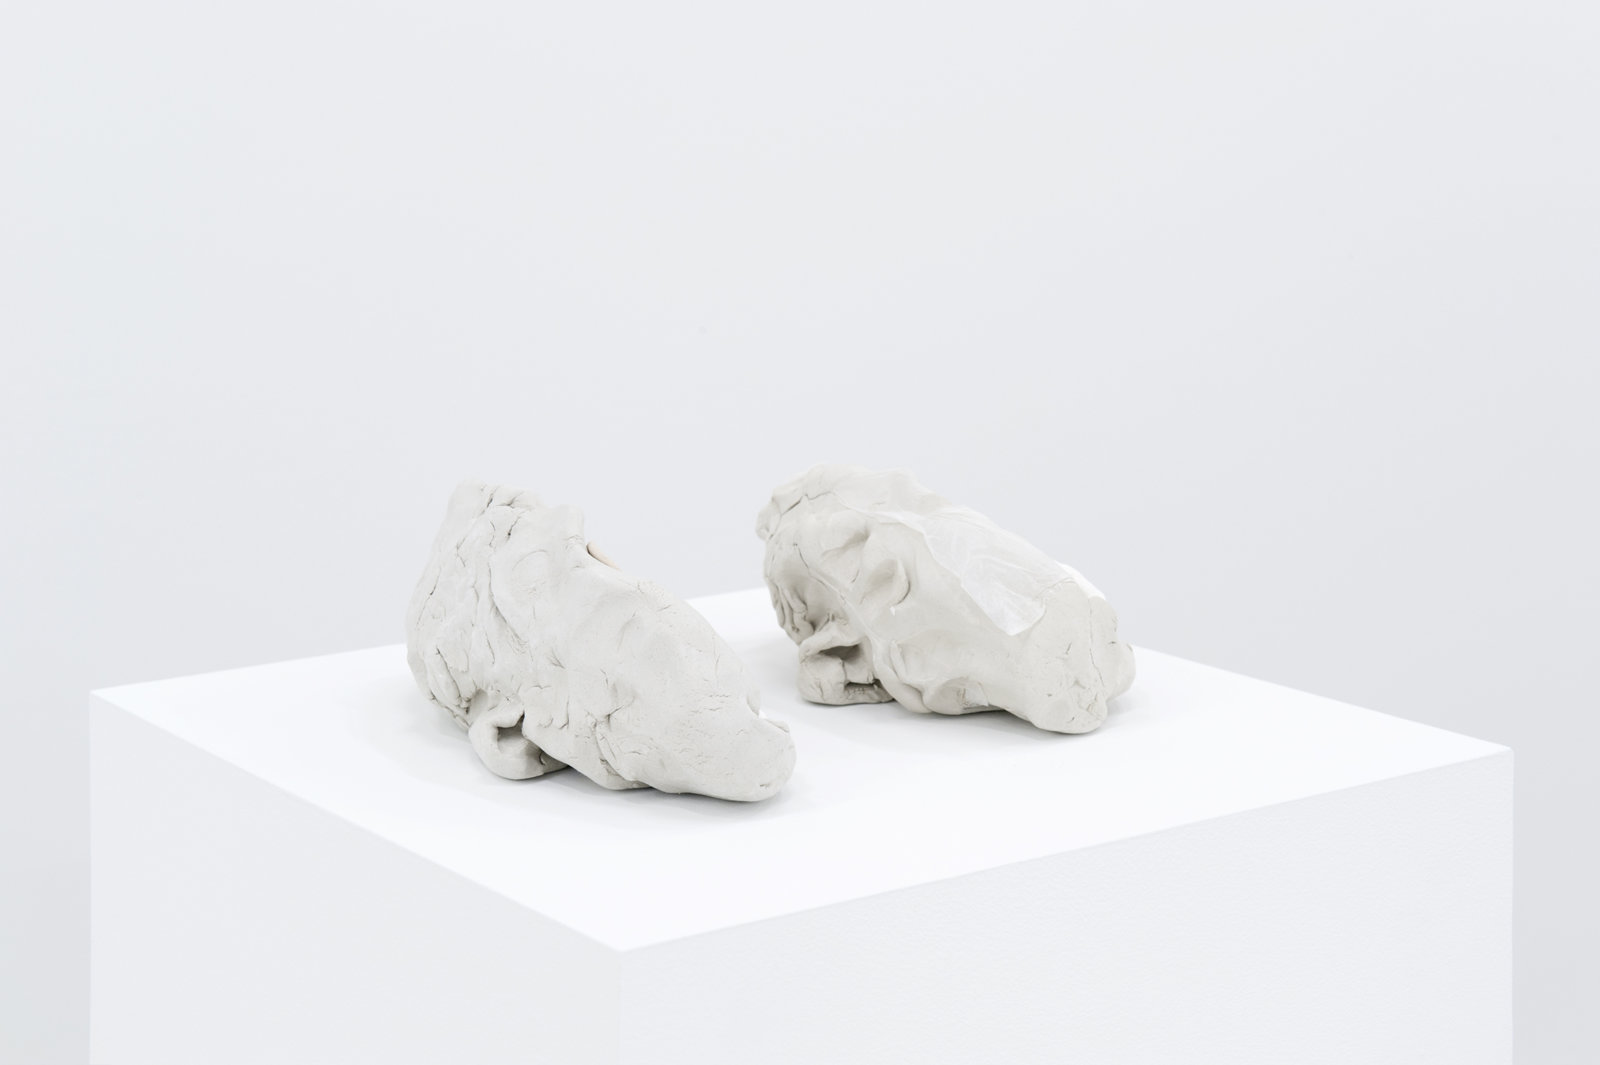 Christina Mackie, Deadheads, 2010, polymer clays, nylon reinforced air drying clay, jade, quartz, 10 x 6 x 5 in. (25 x 15 x 13 cm)